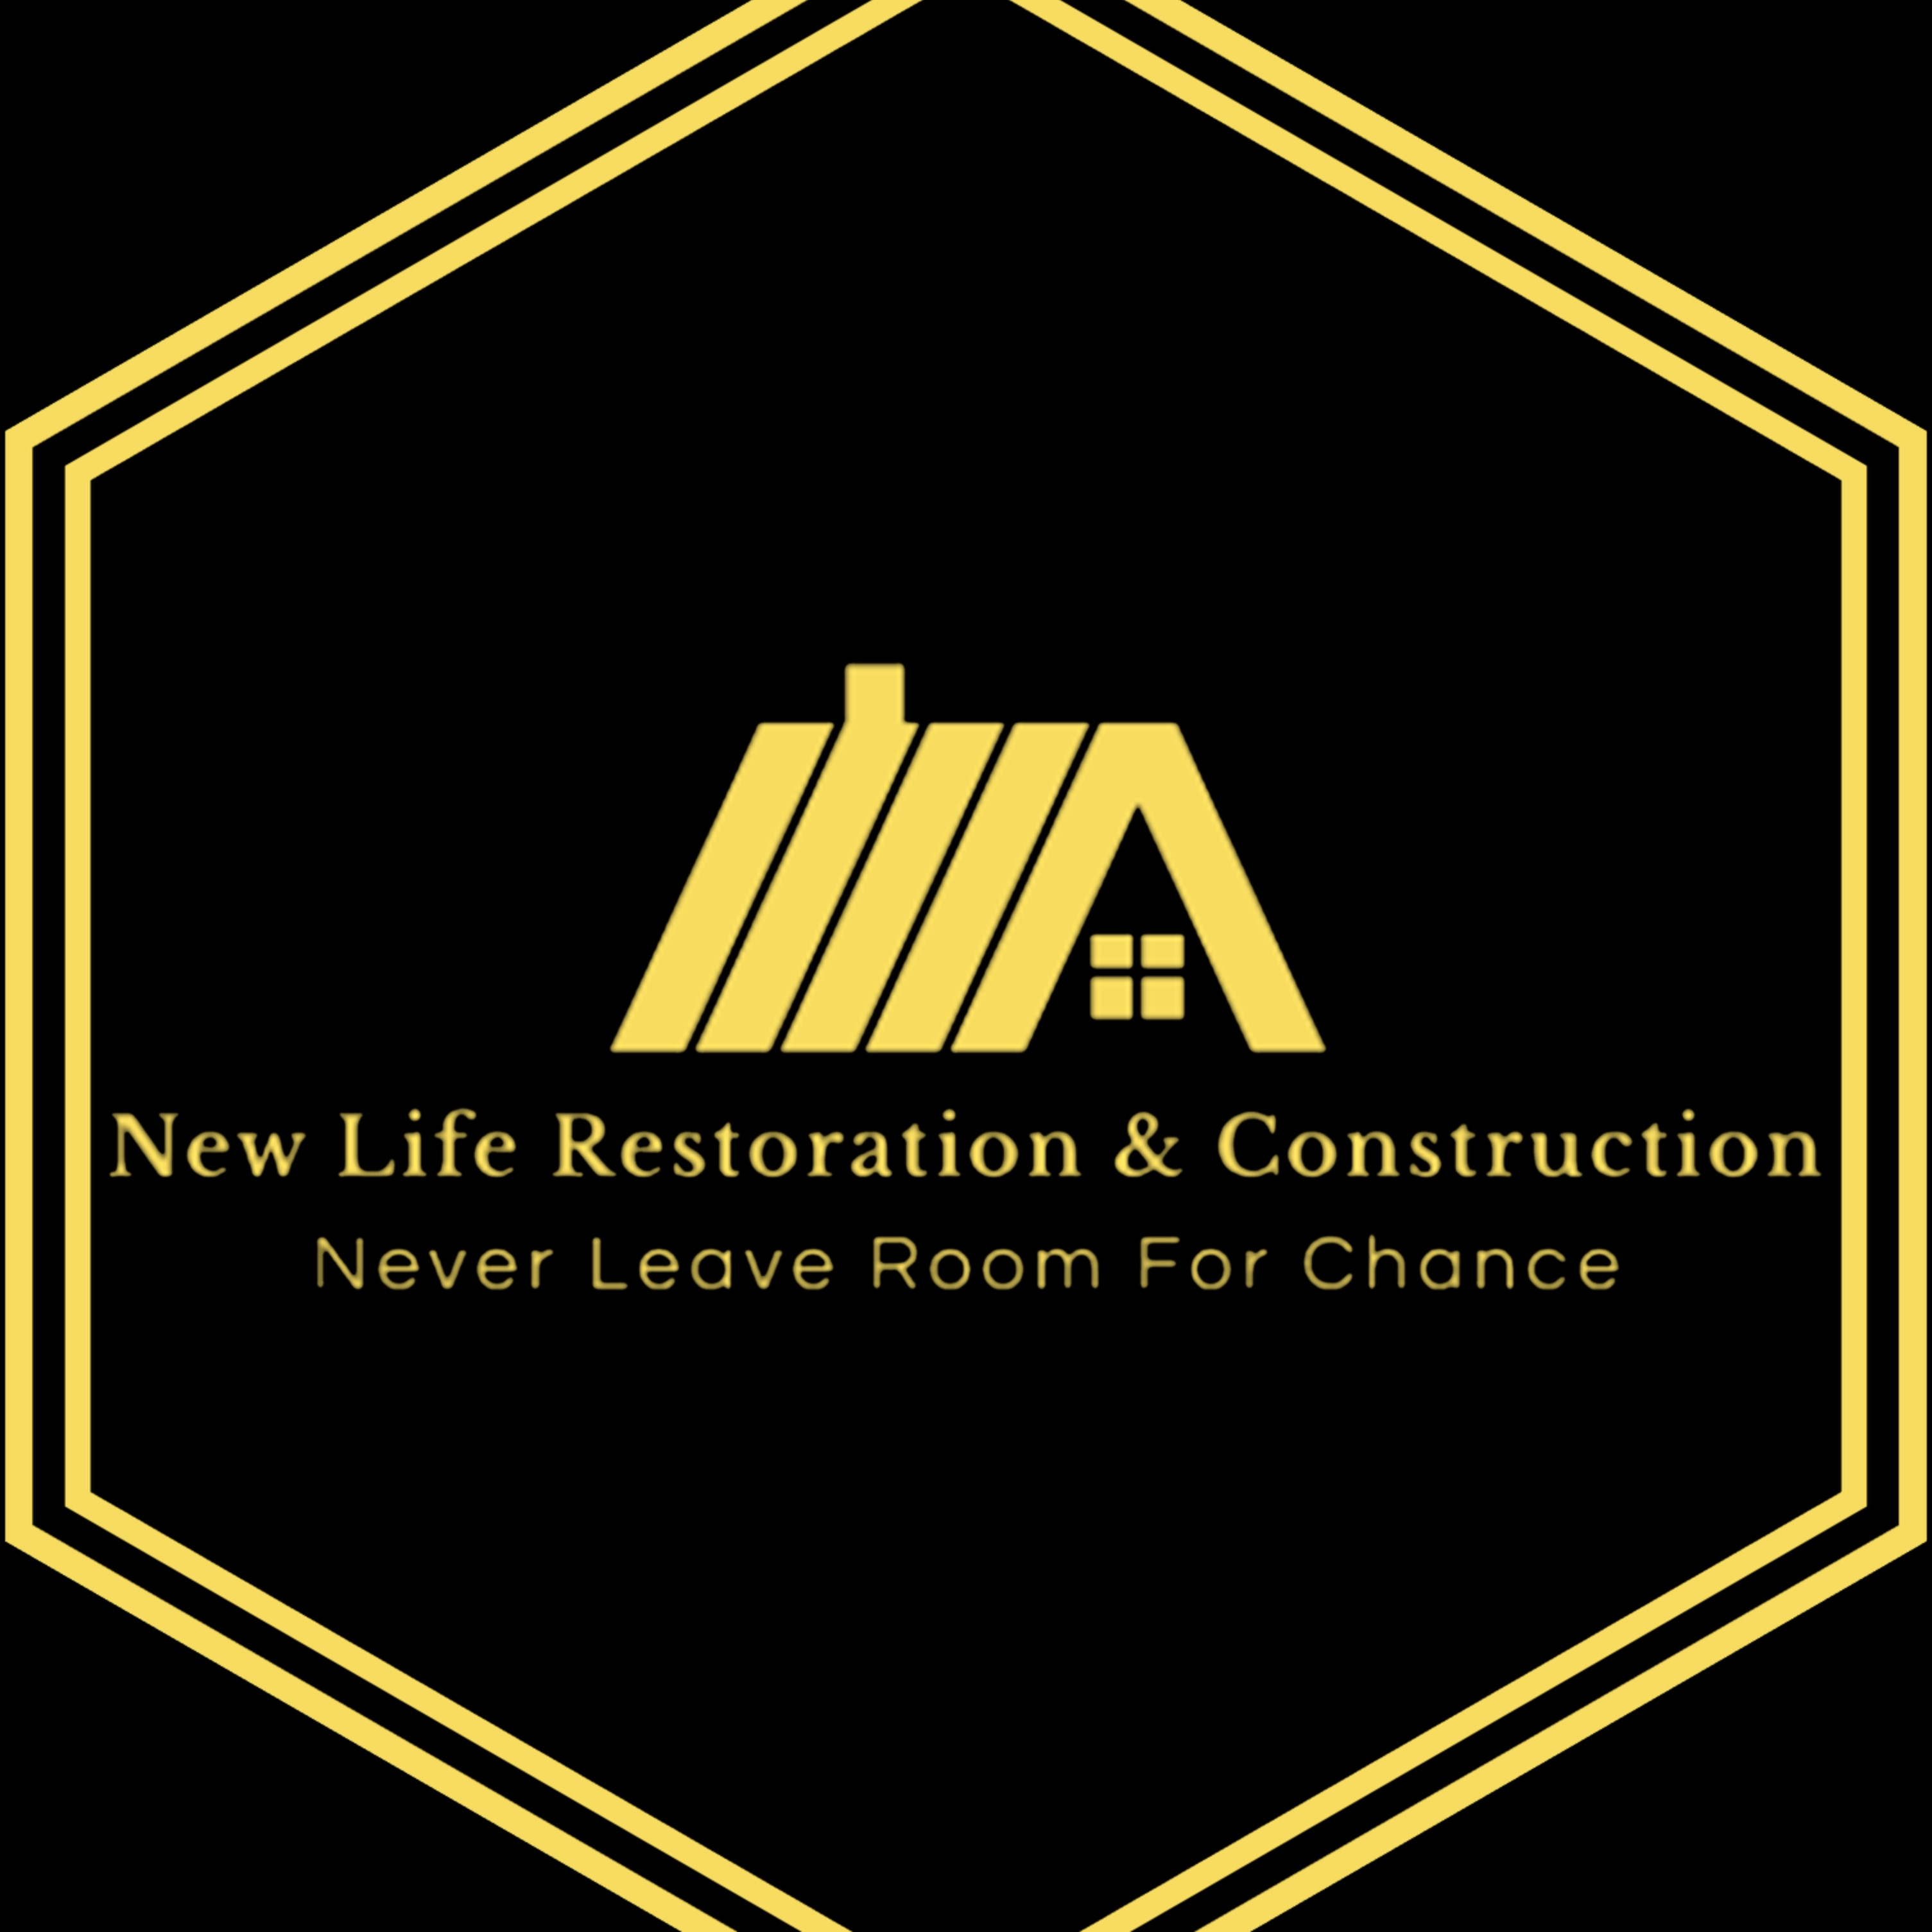 New Life Restoration & Construction